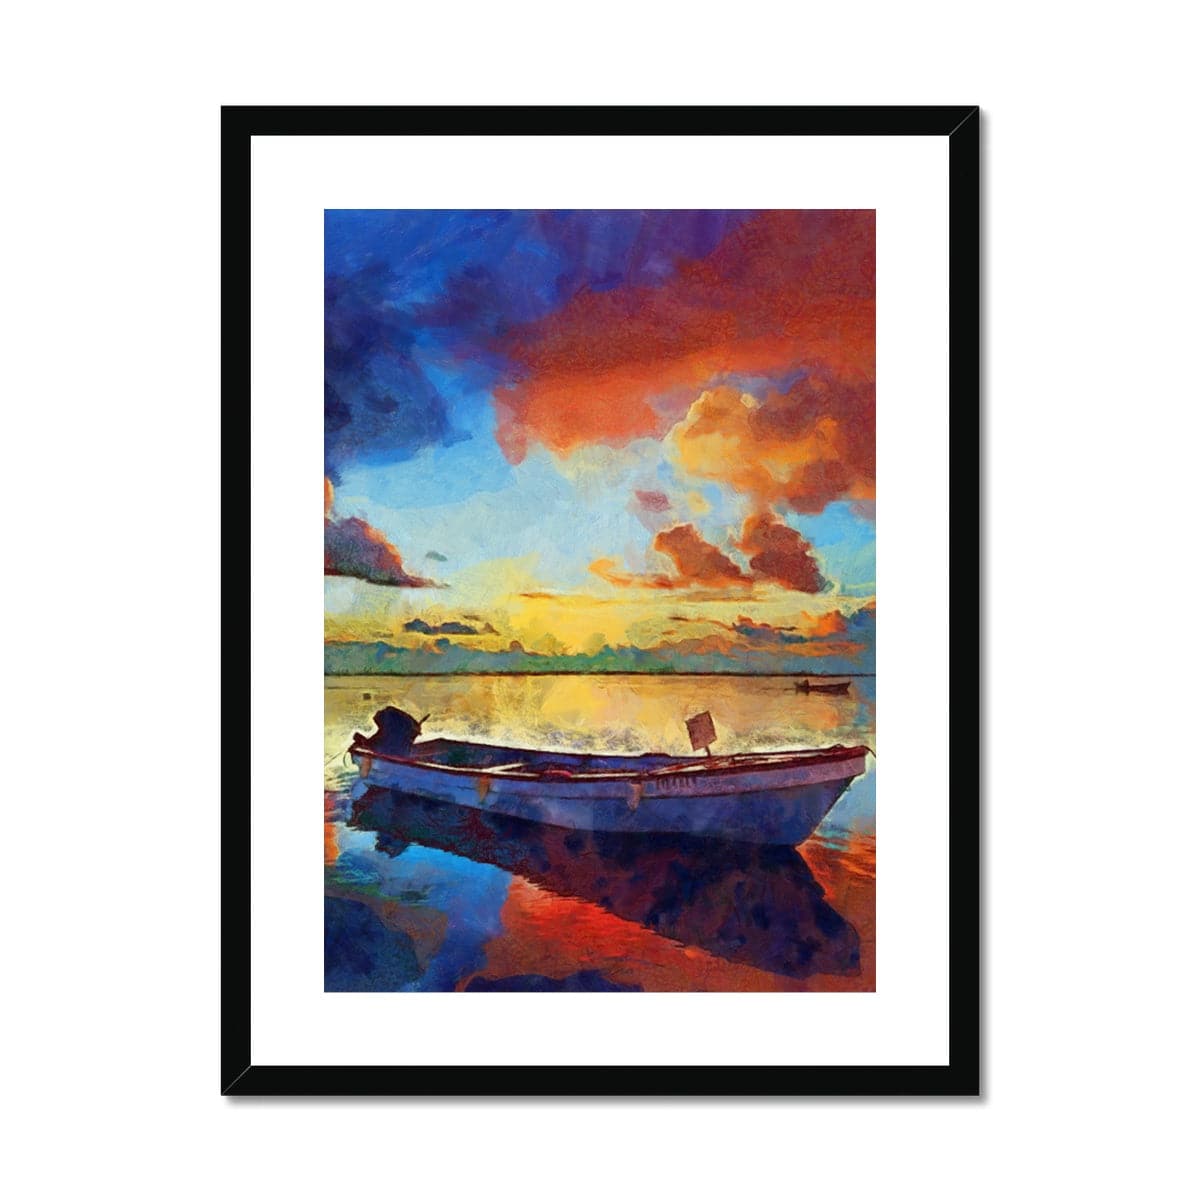 Boat at Orange Dawn in Lake Framed & Mounted Print